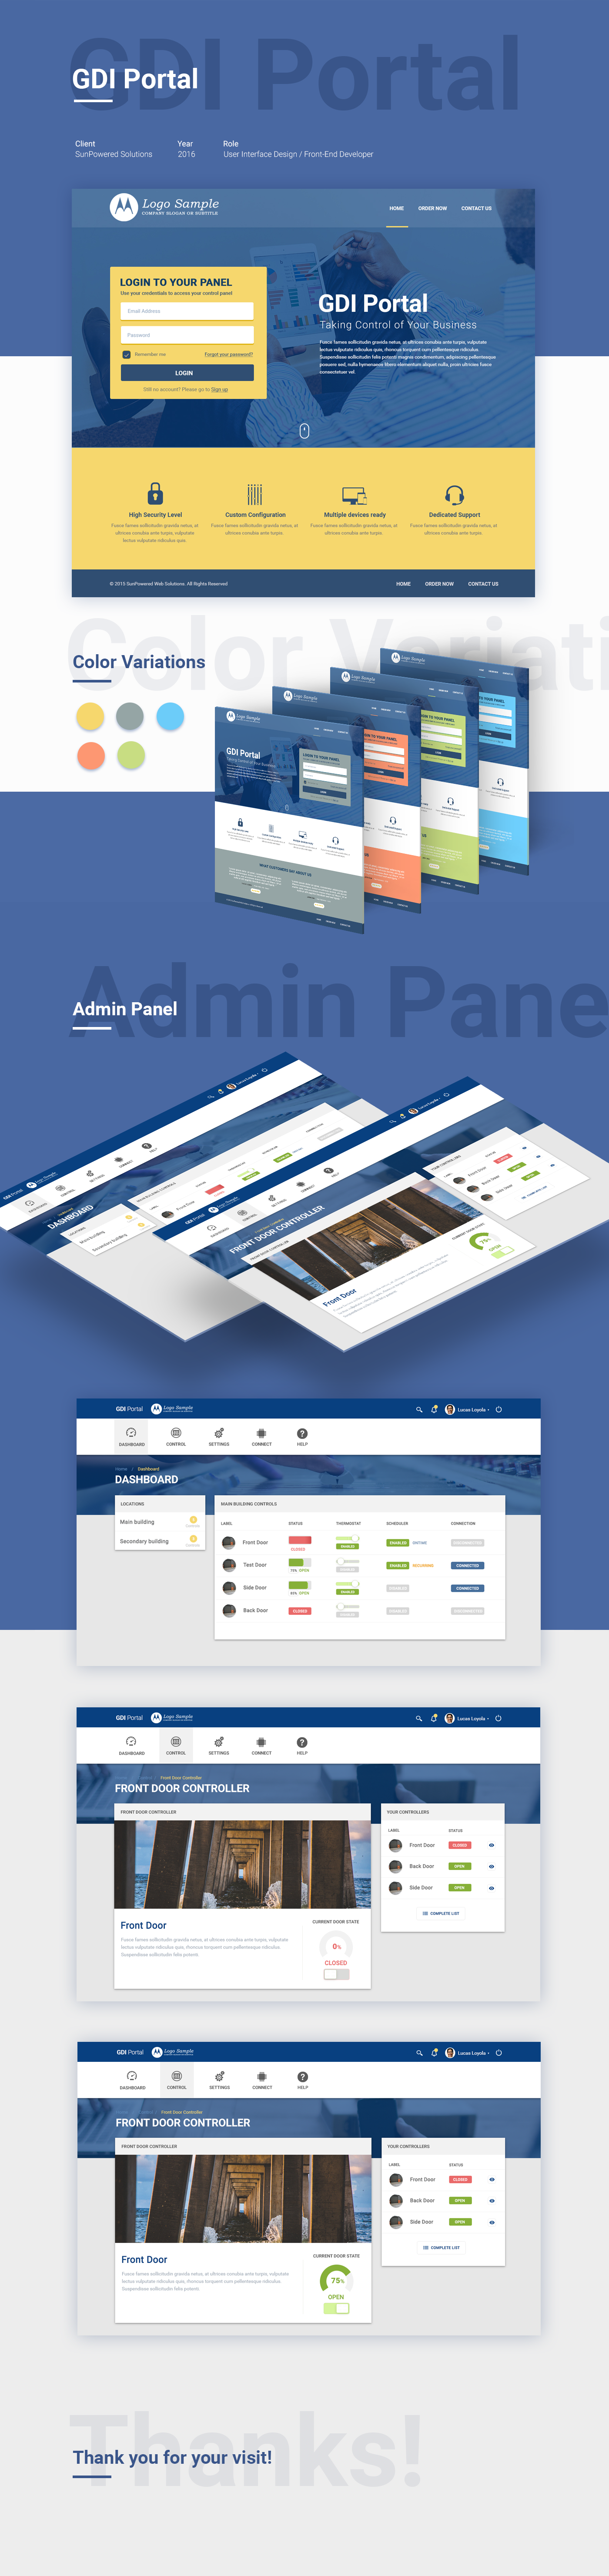 user interface material design admin panel mvp Lucas Loyola Brazil